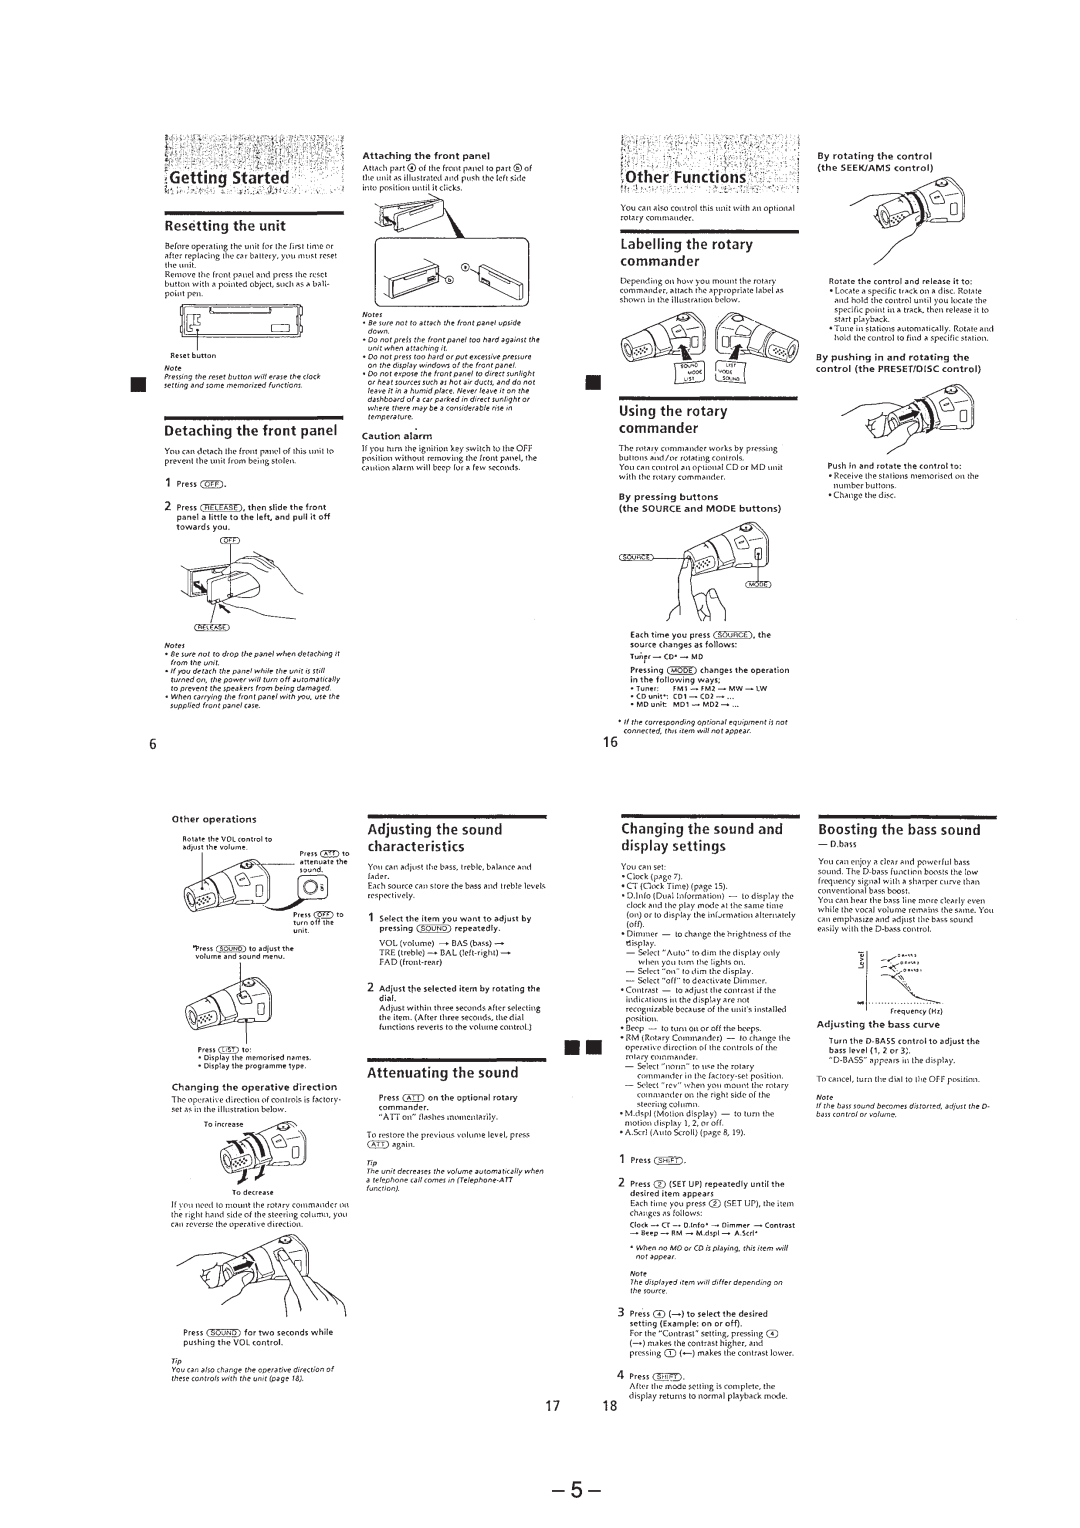 Sony MDX-C5970R service manual 